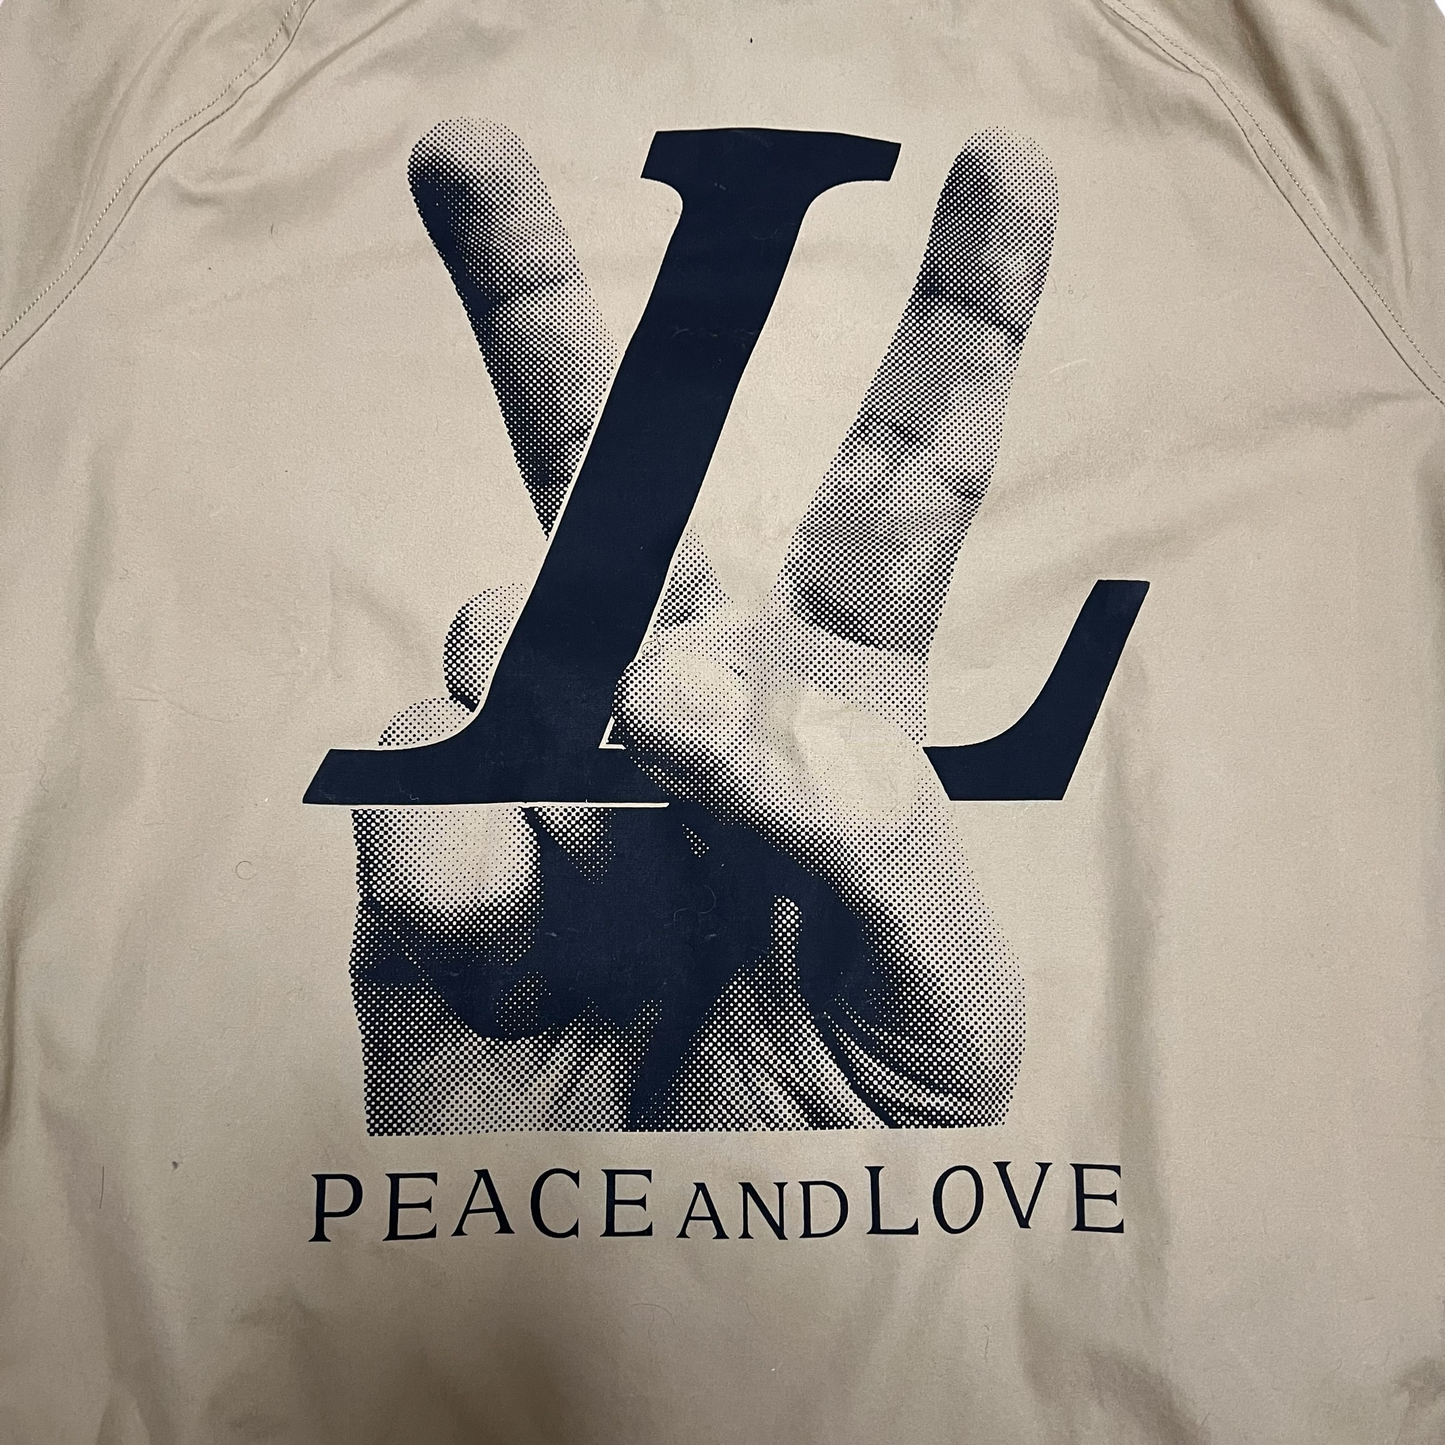 LOUIS VUITTON 2018AW KIM JONES PEACE AND LOVE HARRINGTON JACAKET